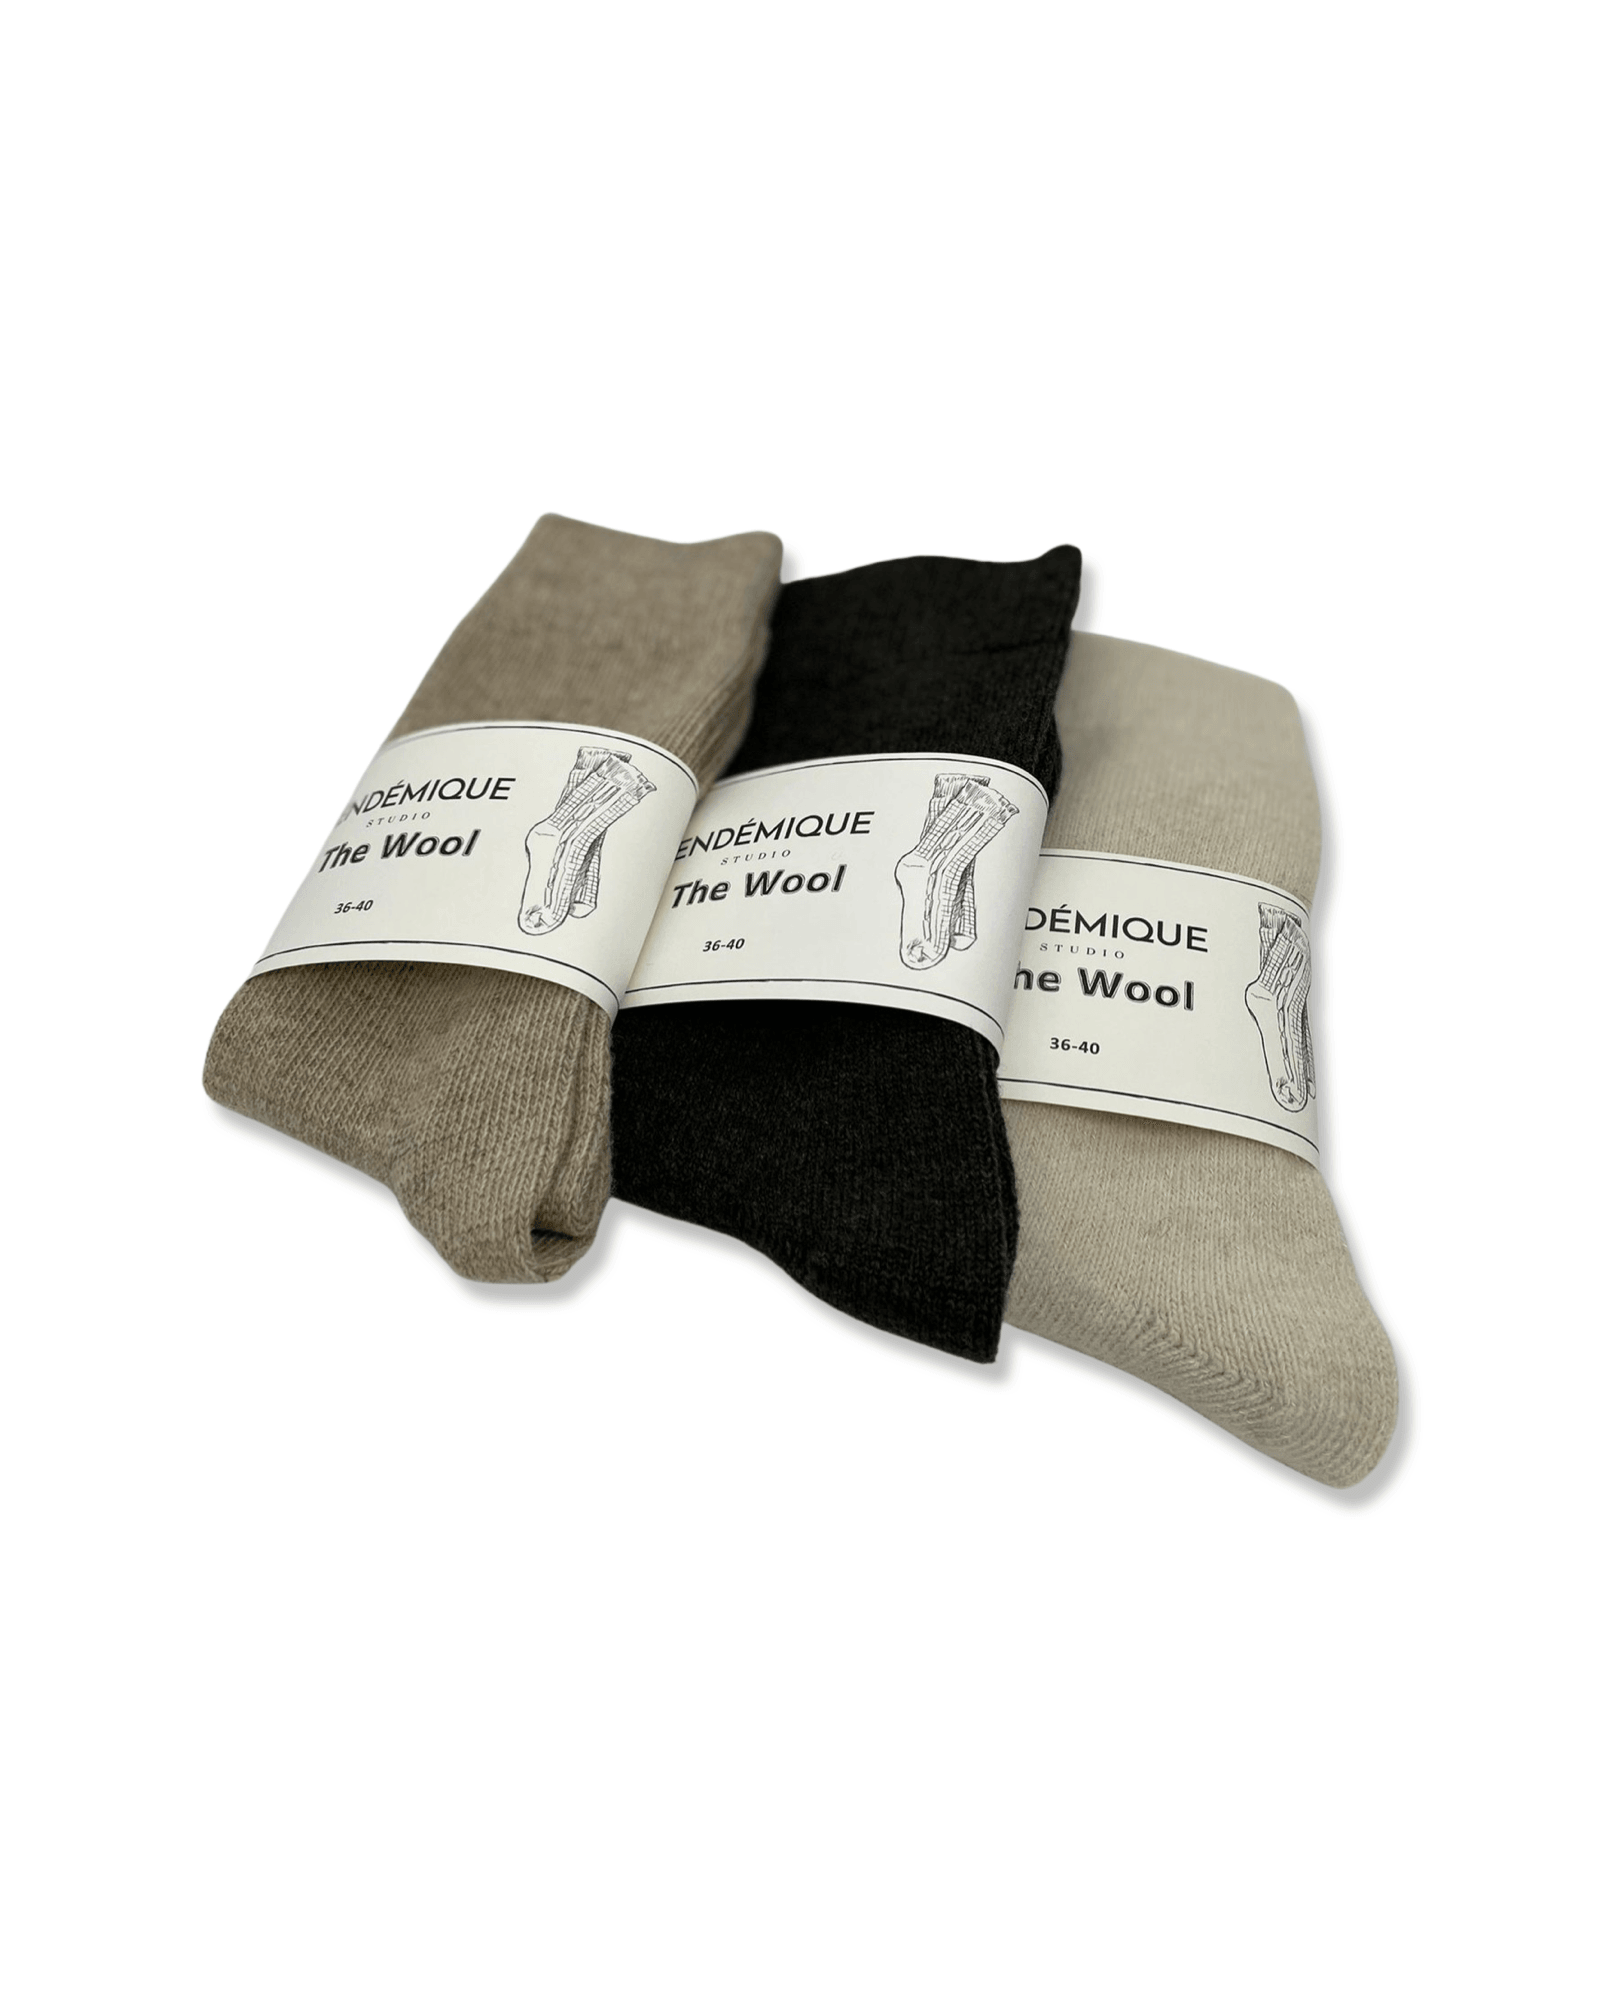 Endémique Studio The Wool Plain Black-Kadın Çorap